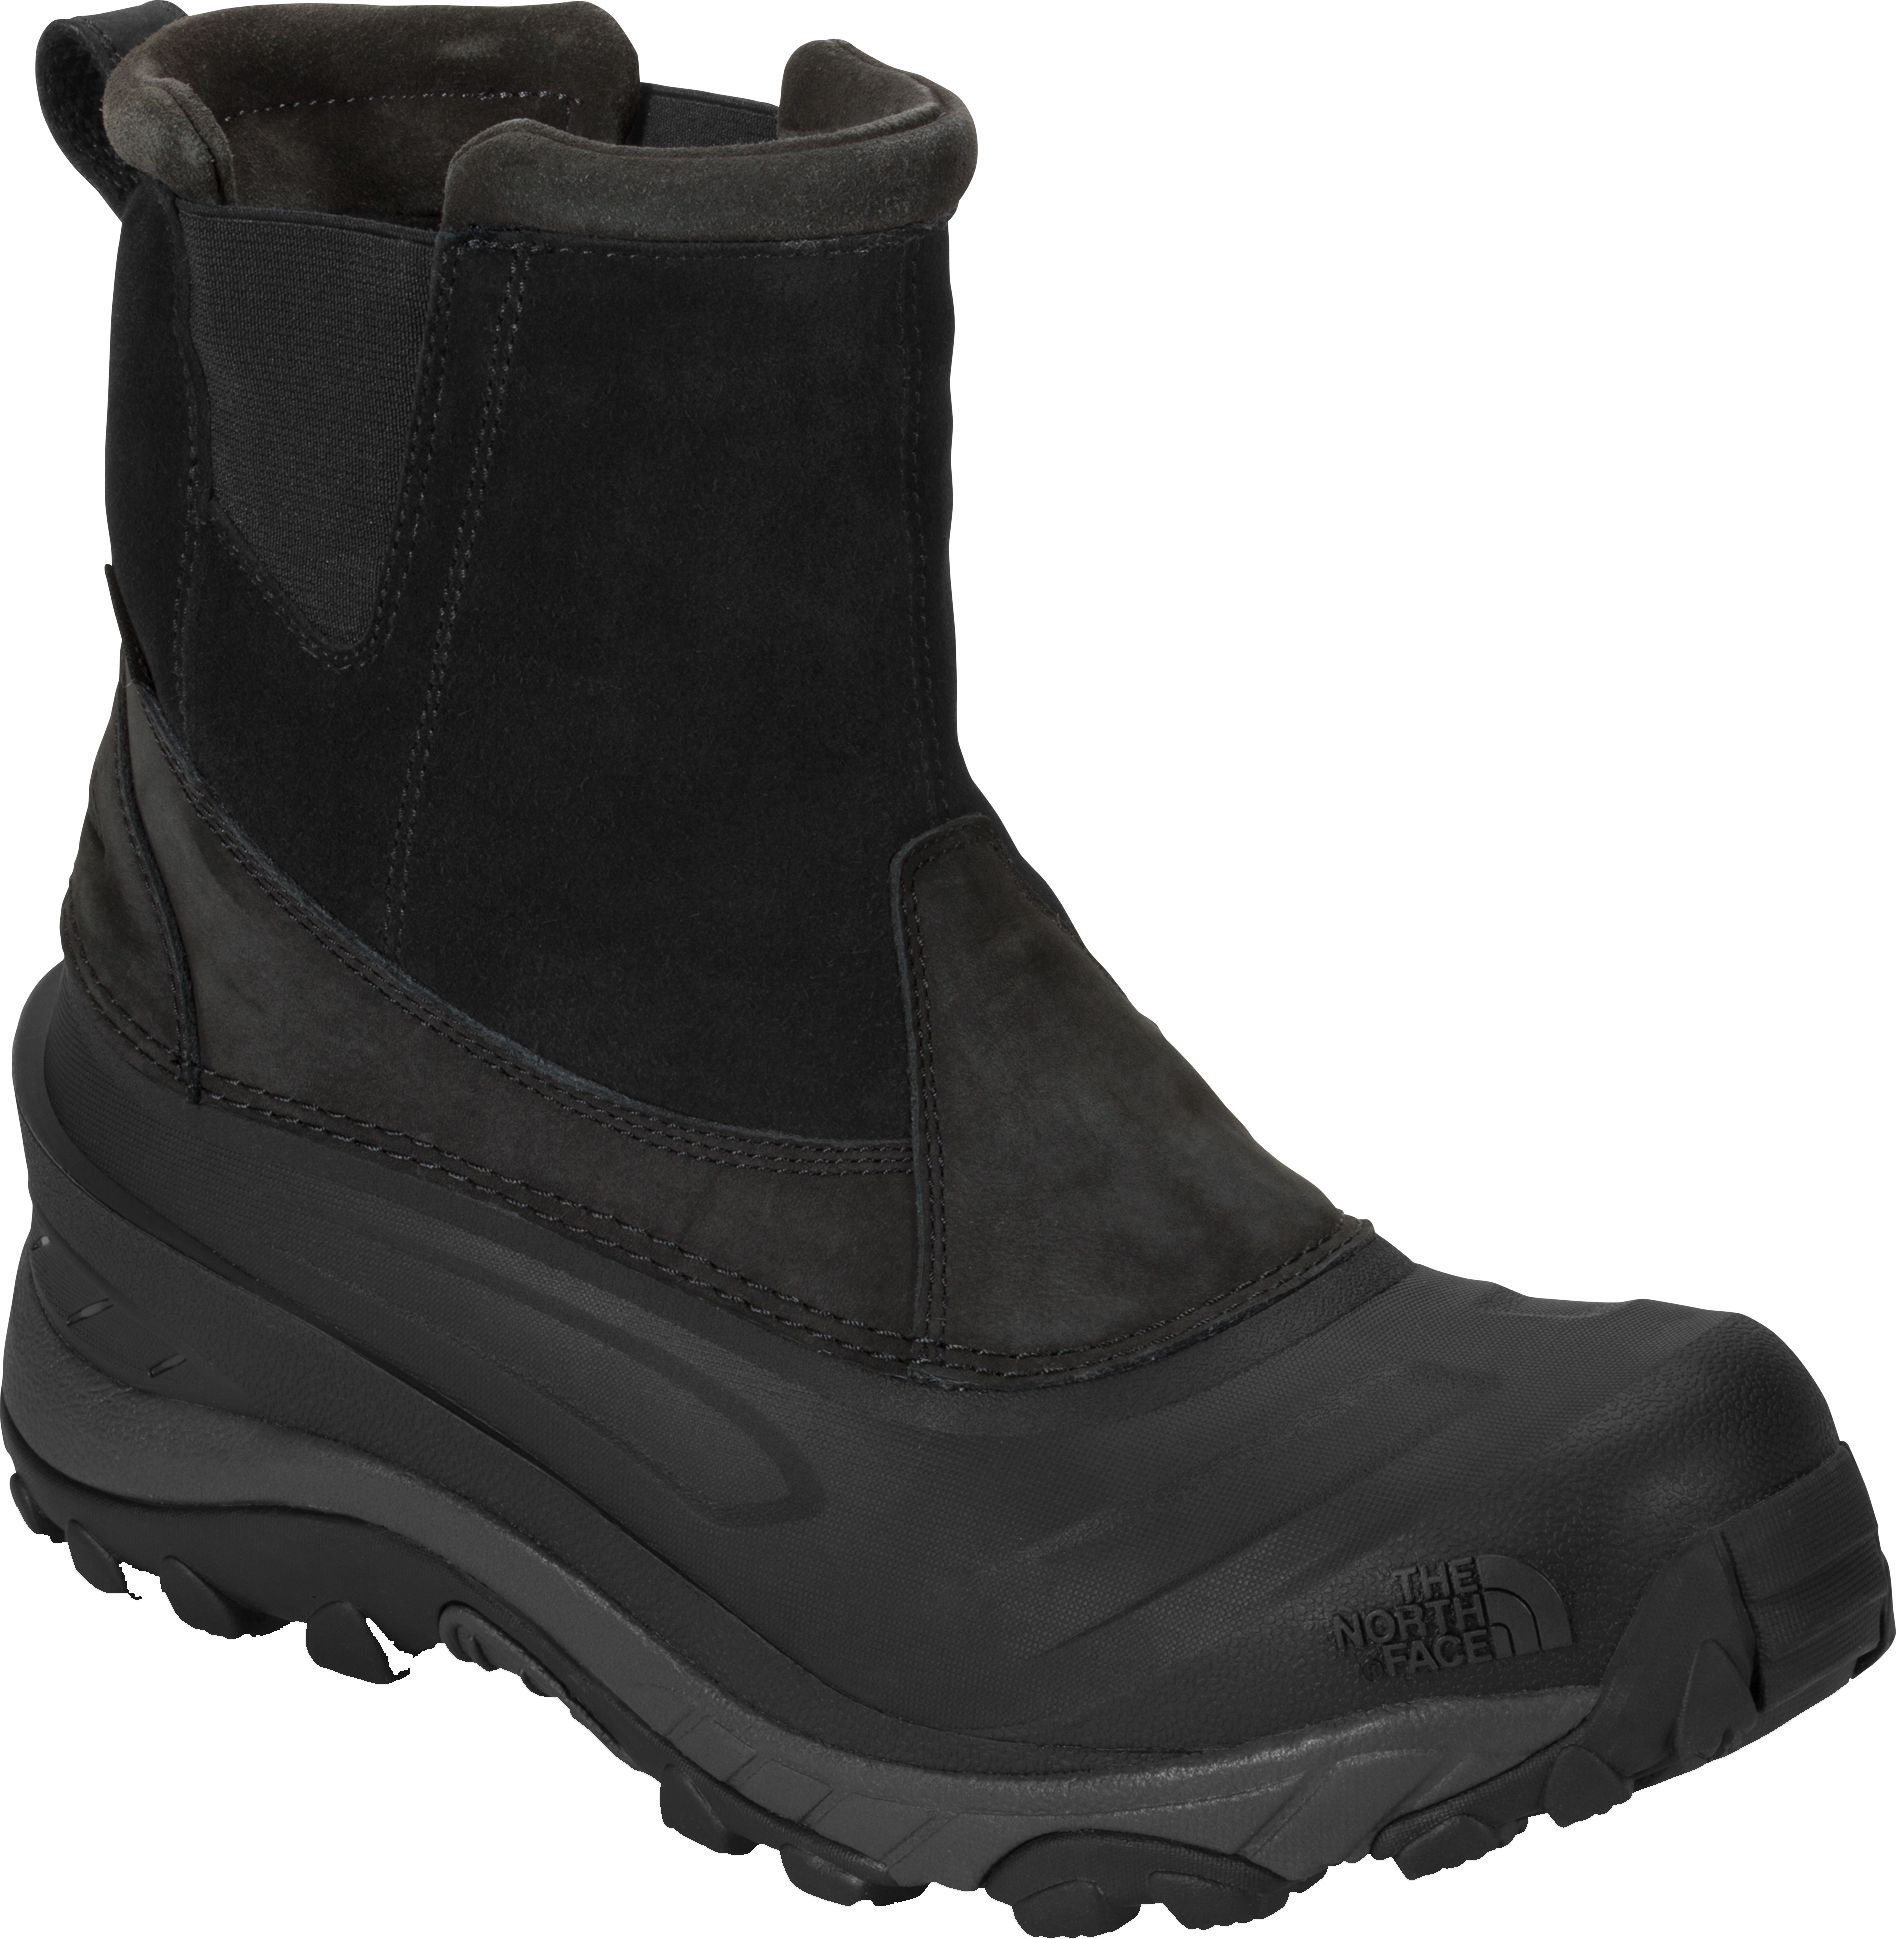 200g Waterproof Winter Boots 